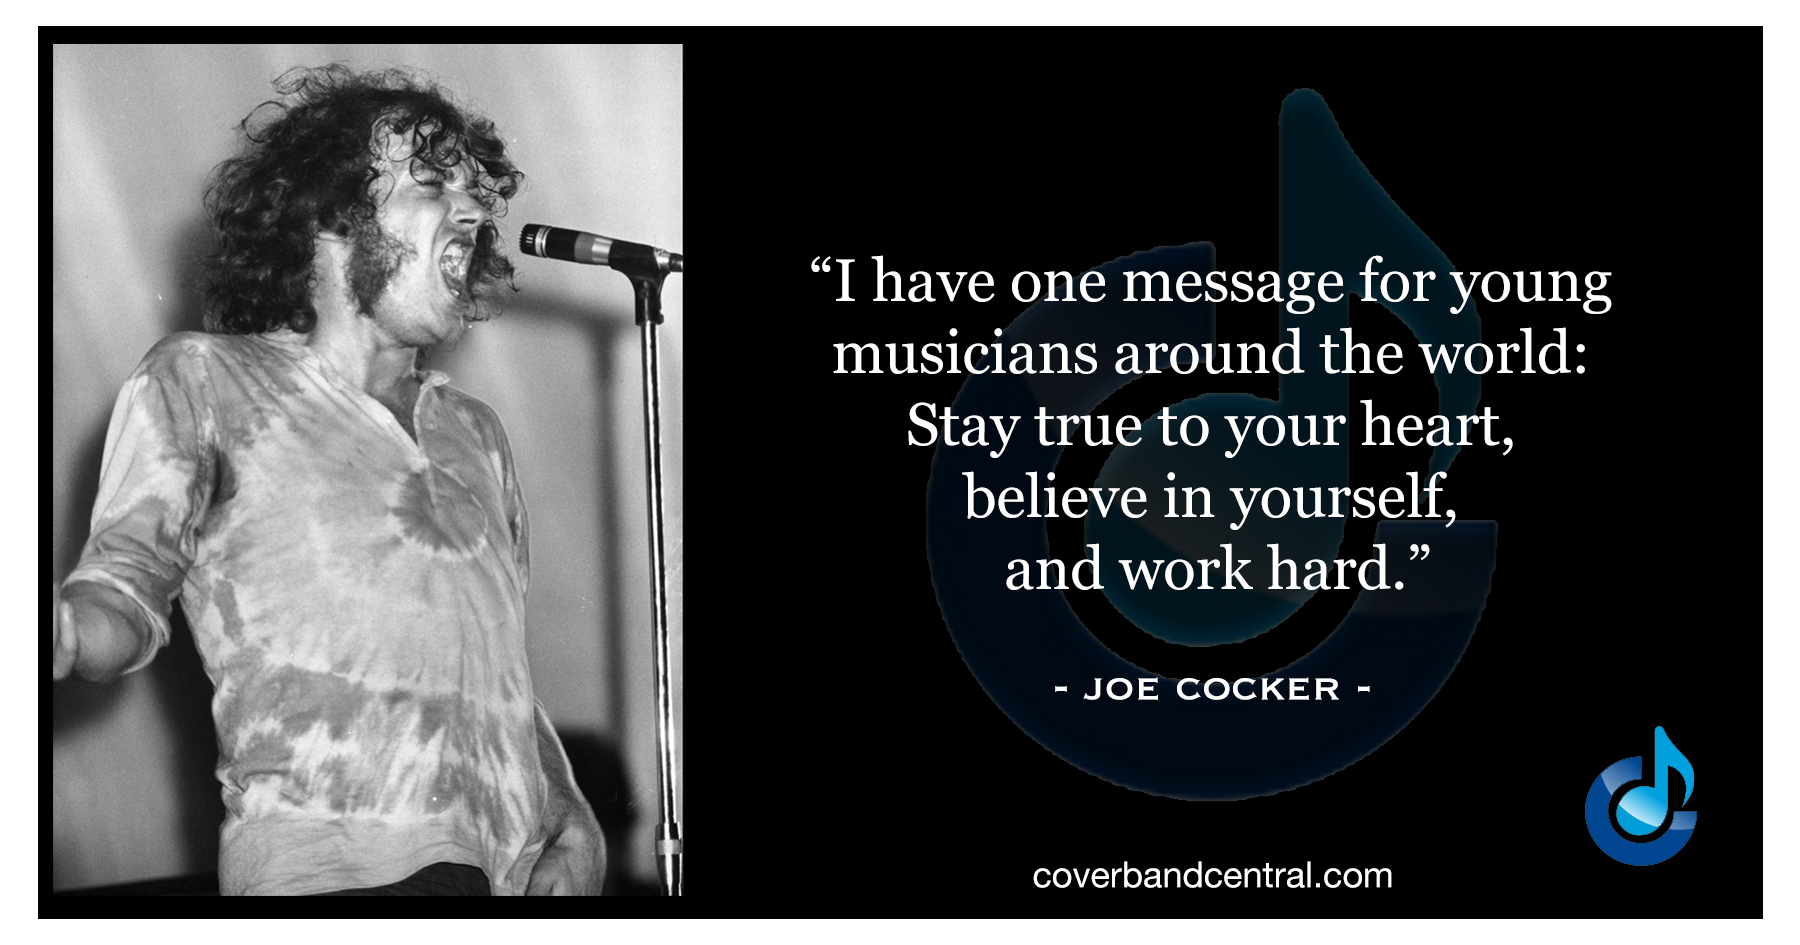 Joe Cocker quote